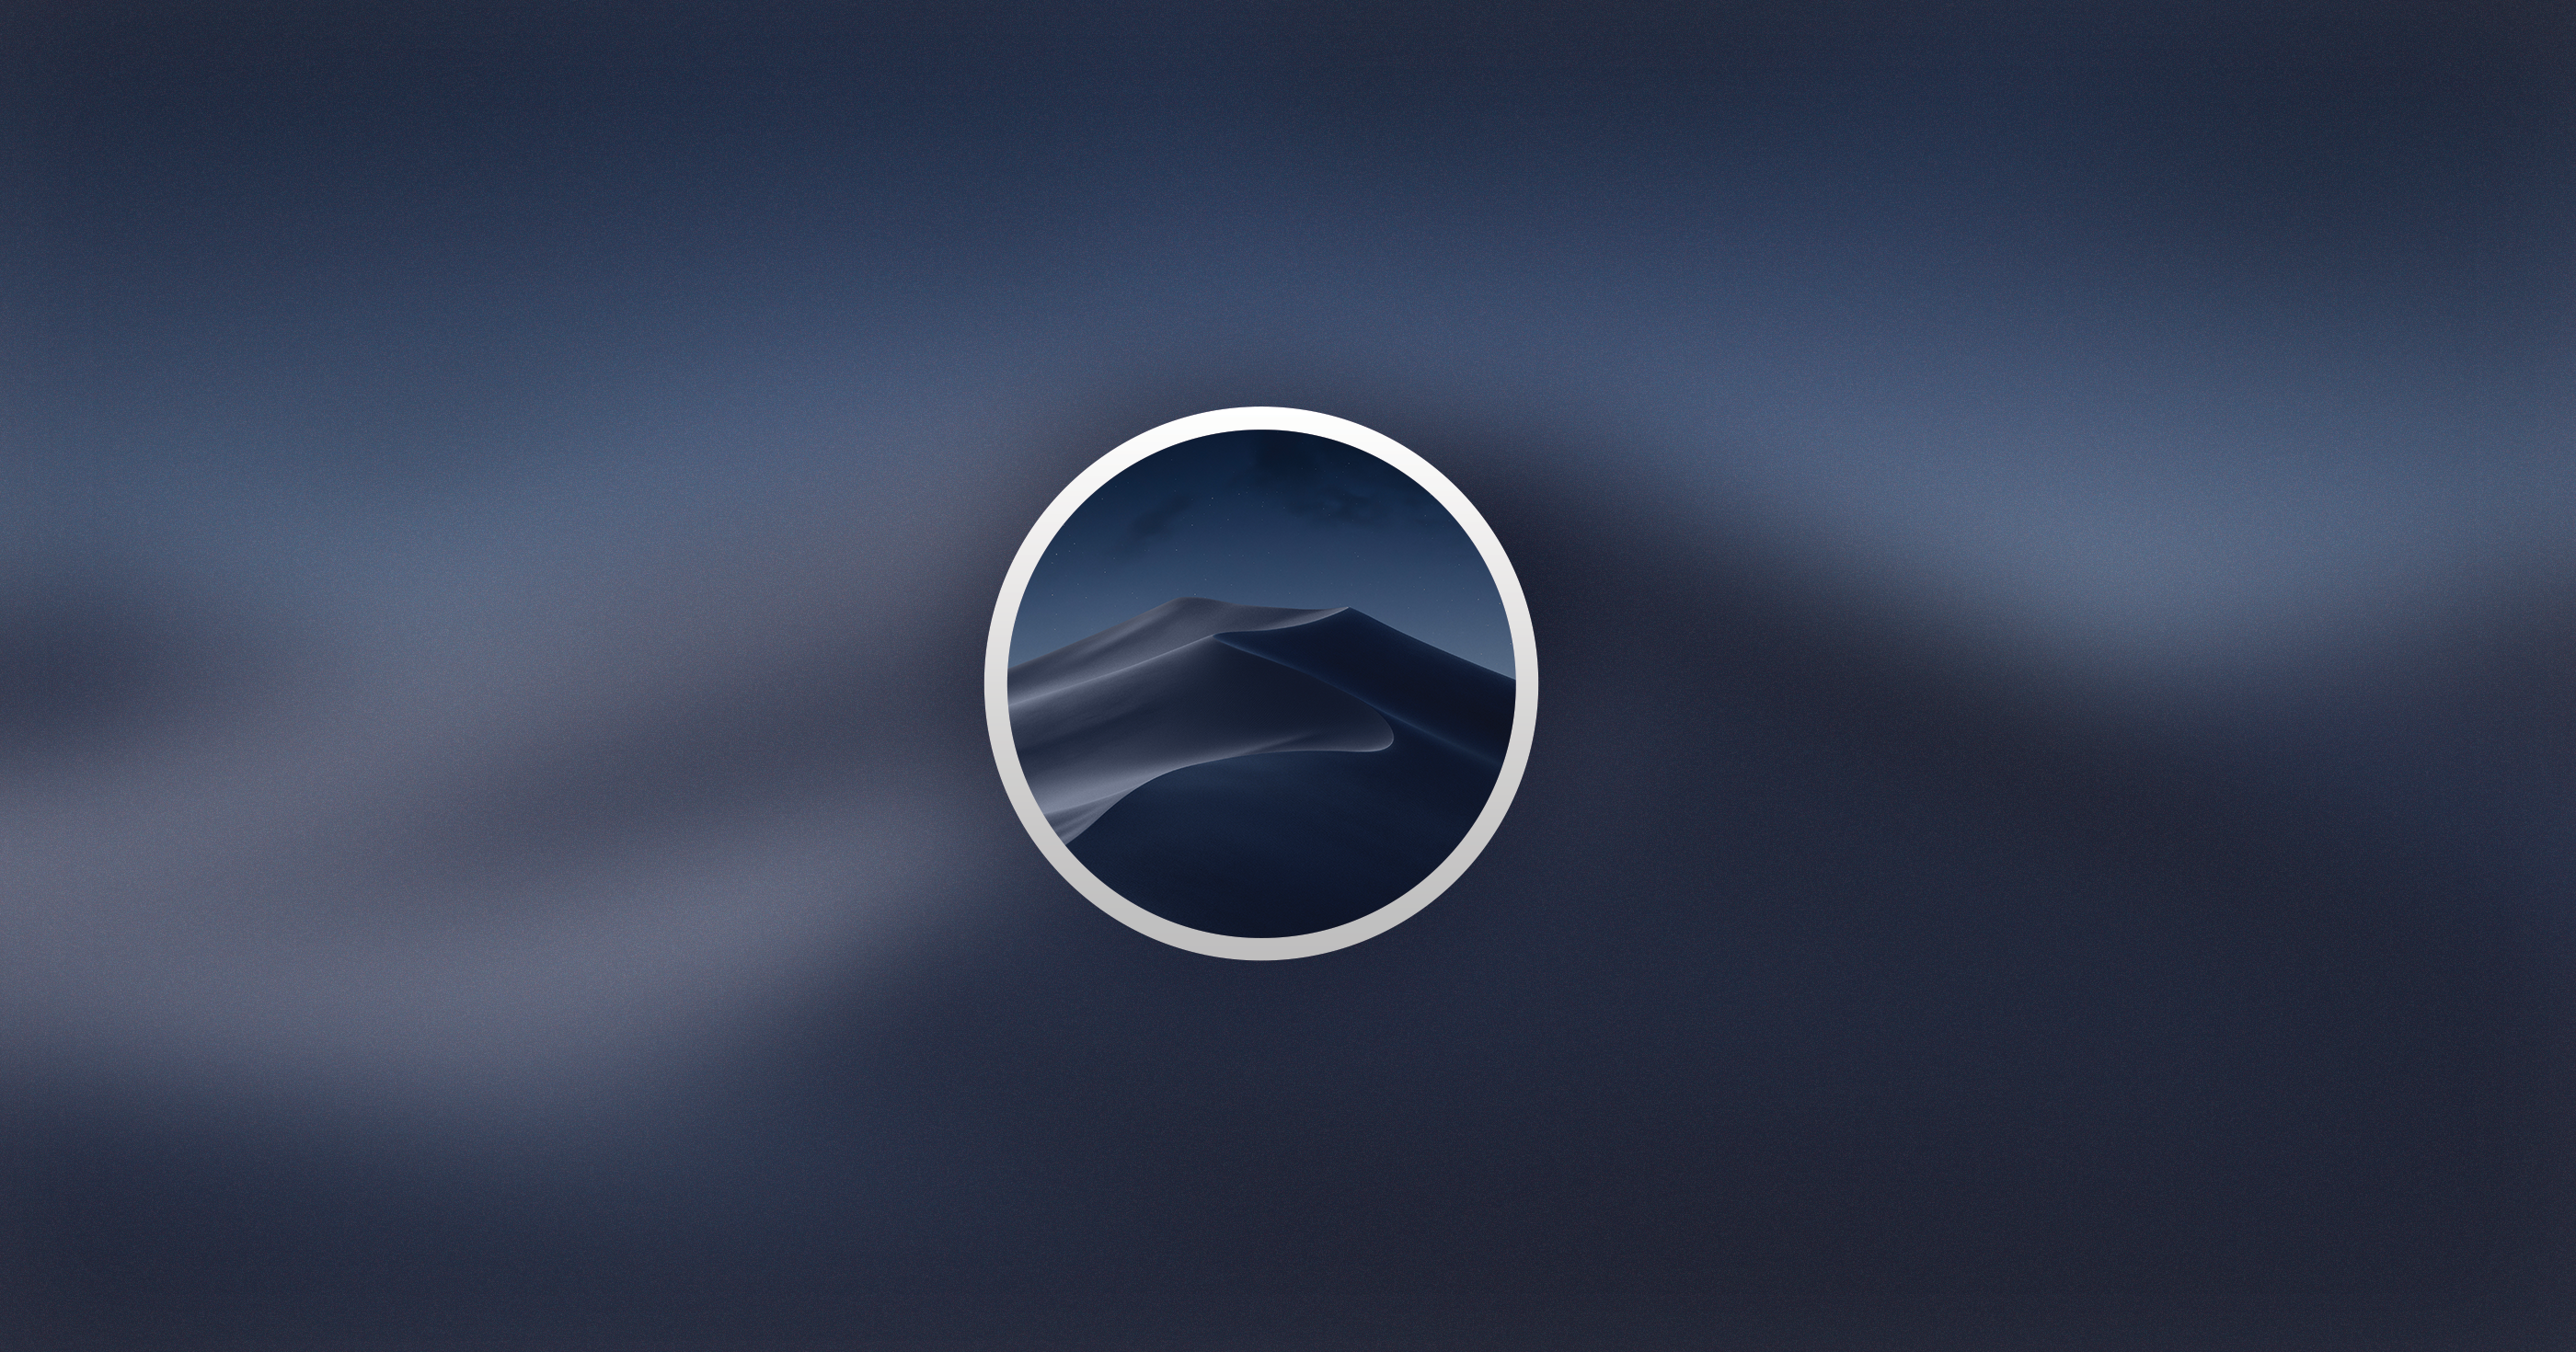 macOS 10.13 Mojave